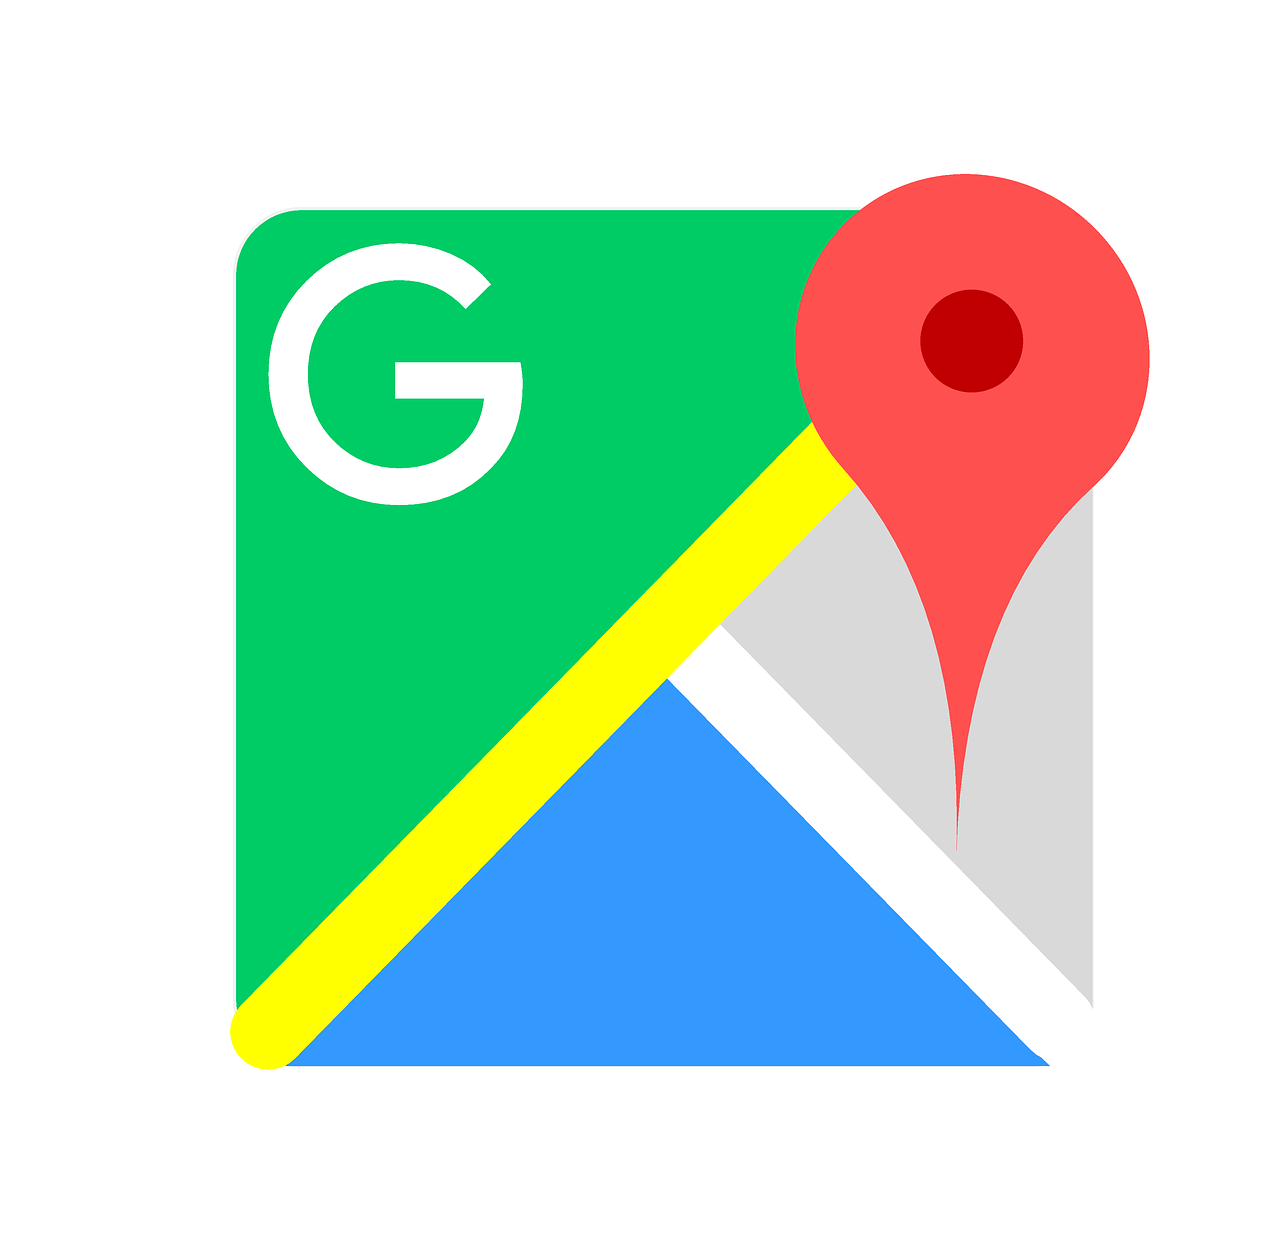 Google maps,navigation,gps,maps,logo - free image from needpix.com